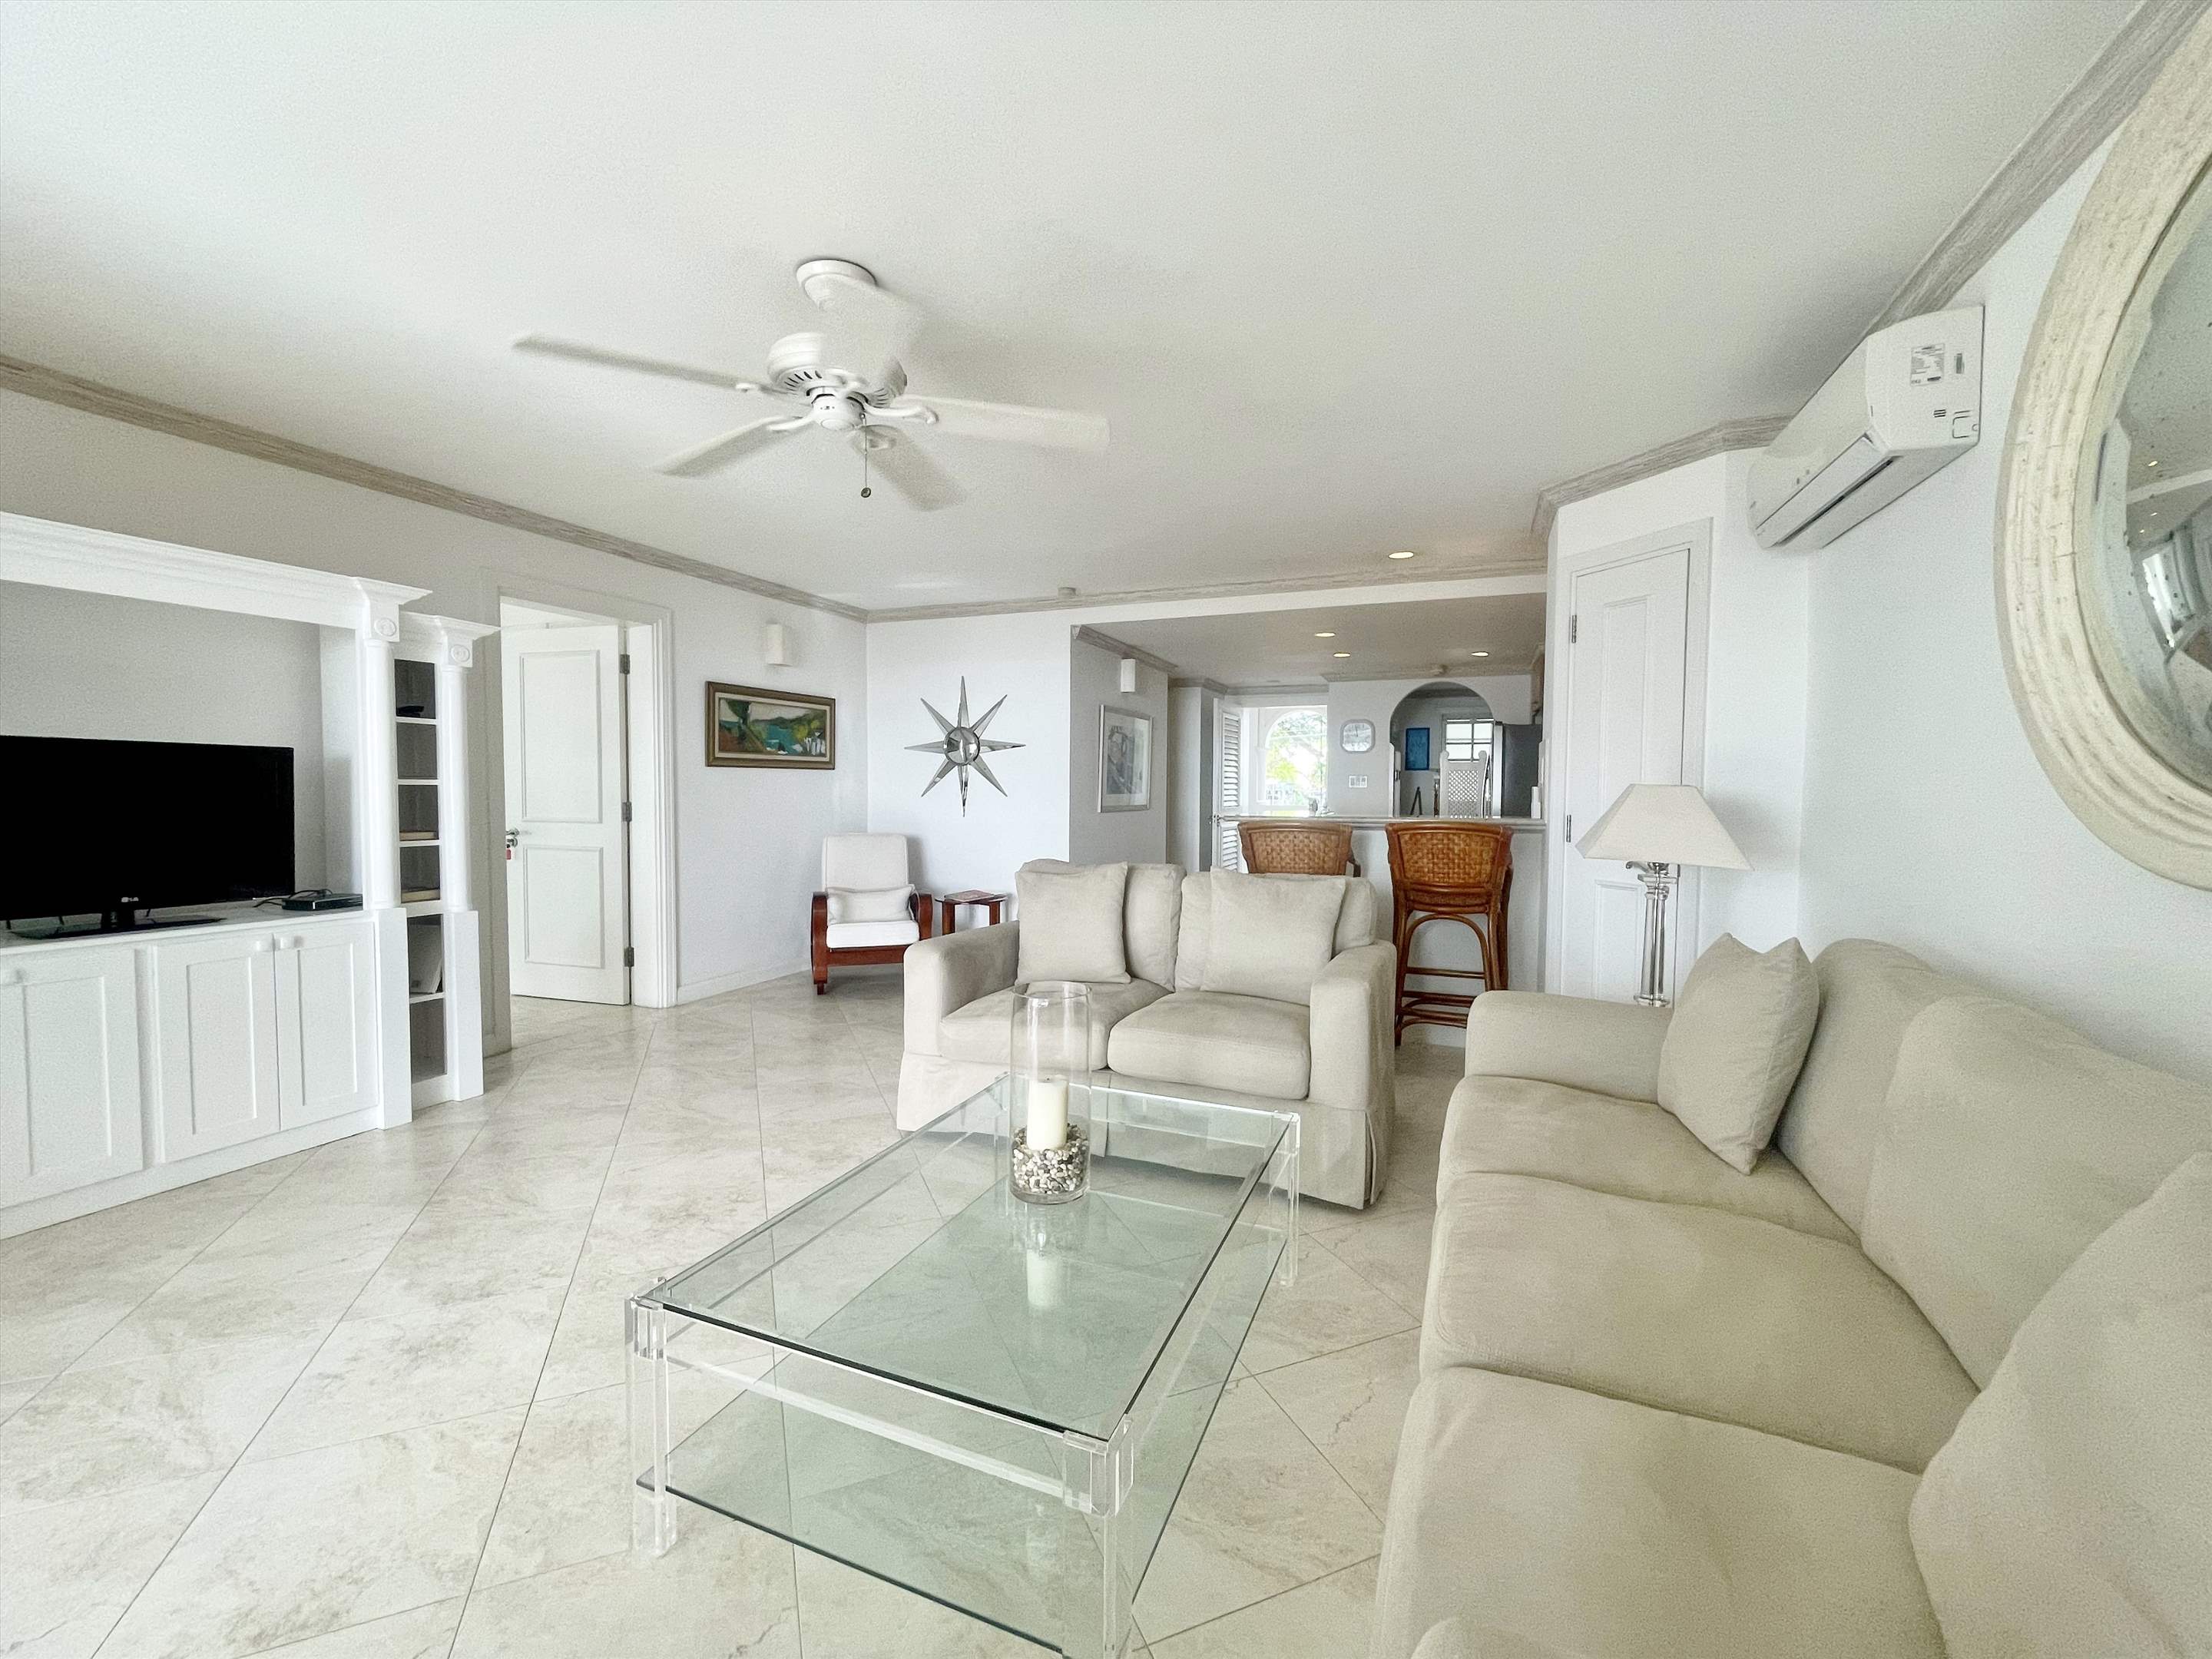 Villas on the Beach 103, 2 bedroom, 2 bedroom apartment in St. James & West Coast, Barbados Photo #4